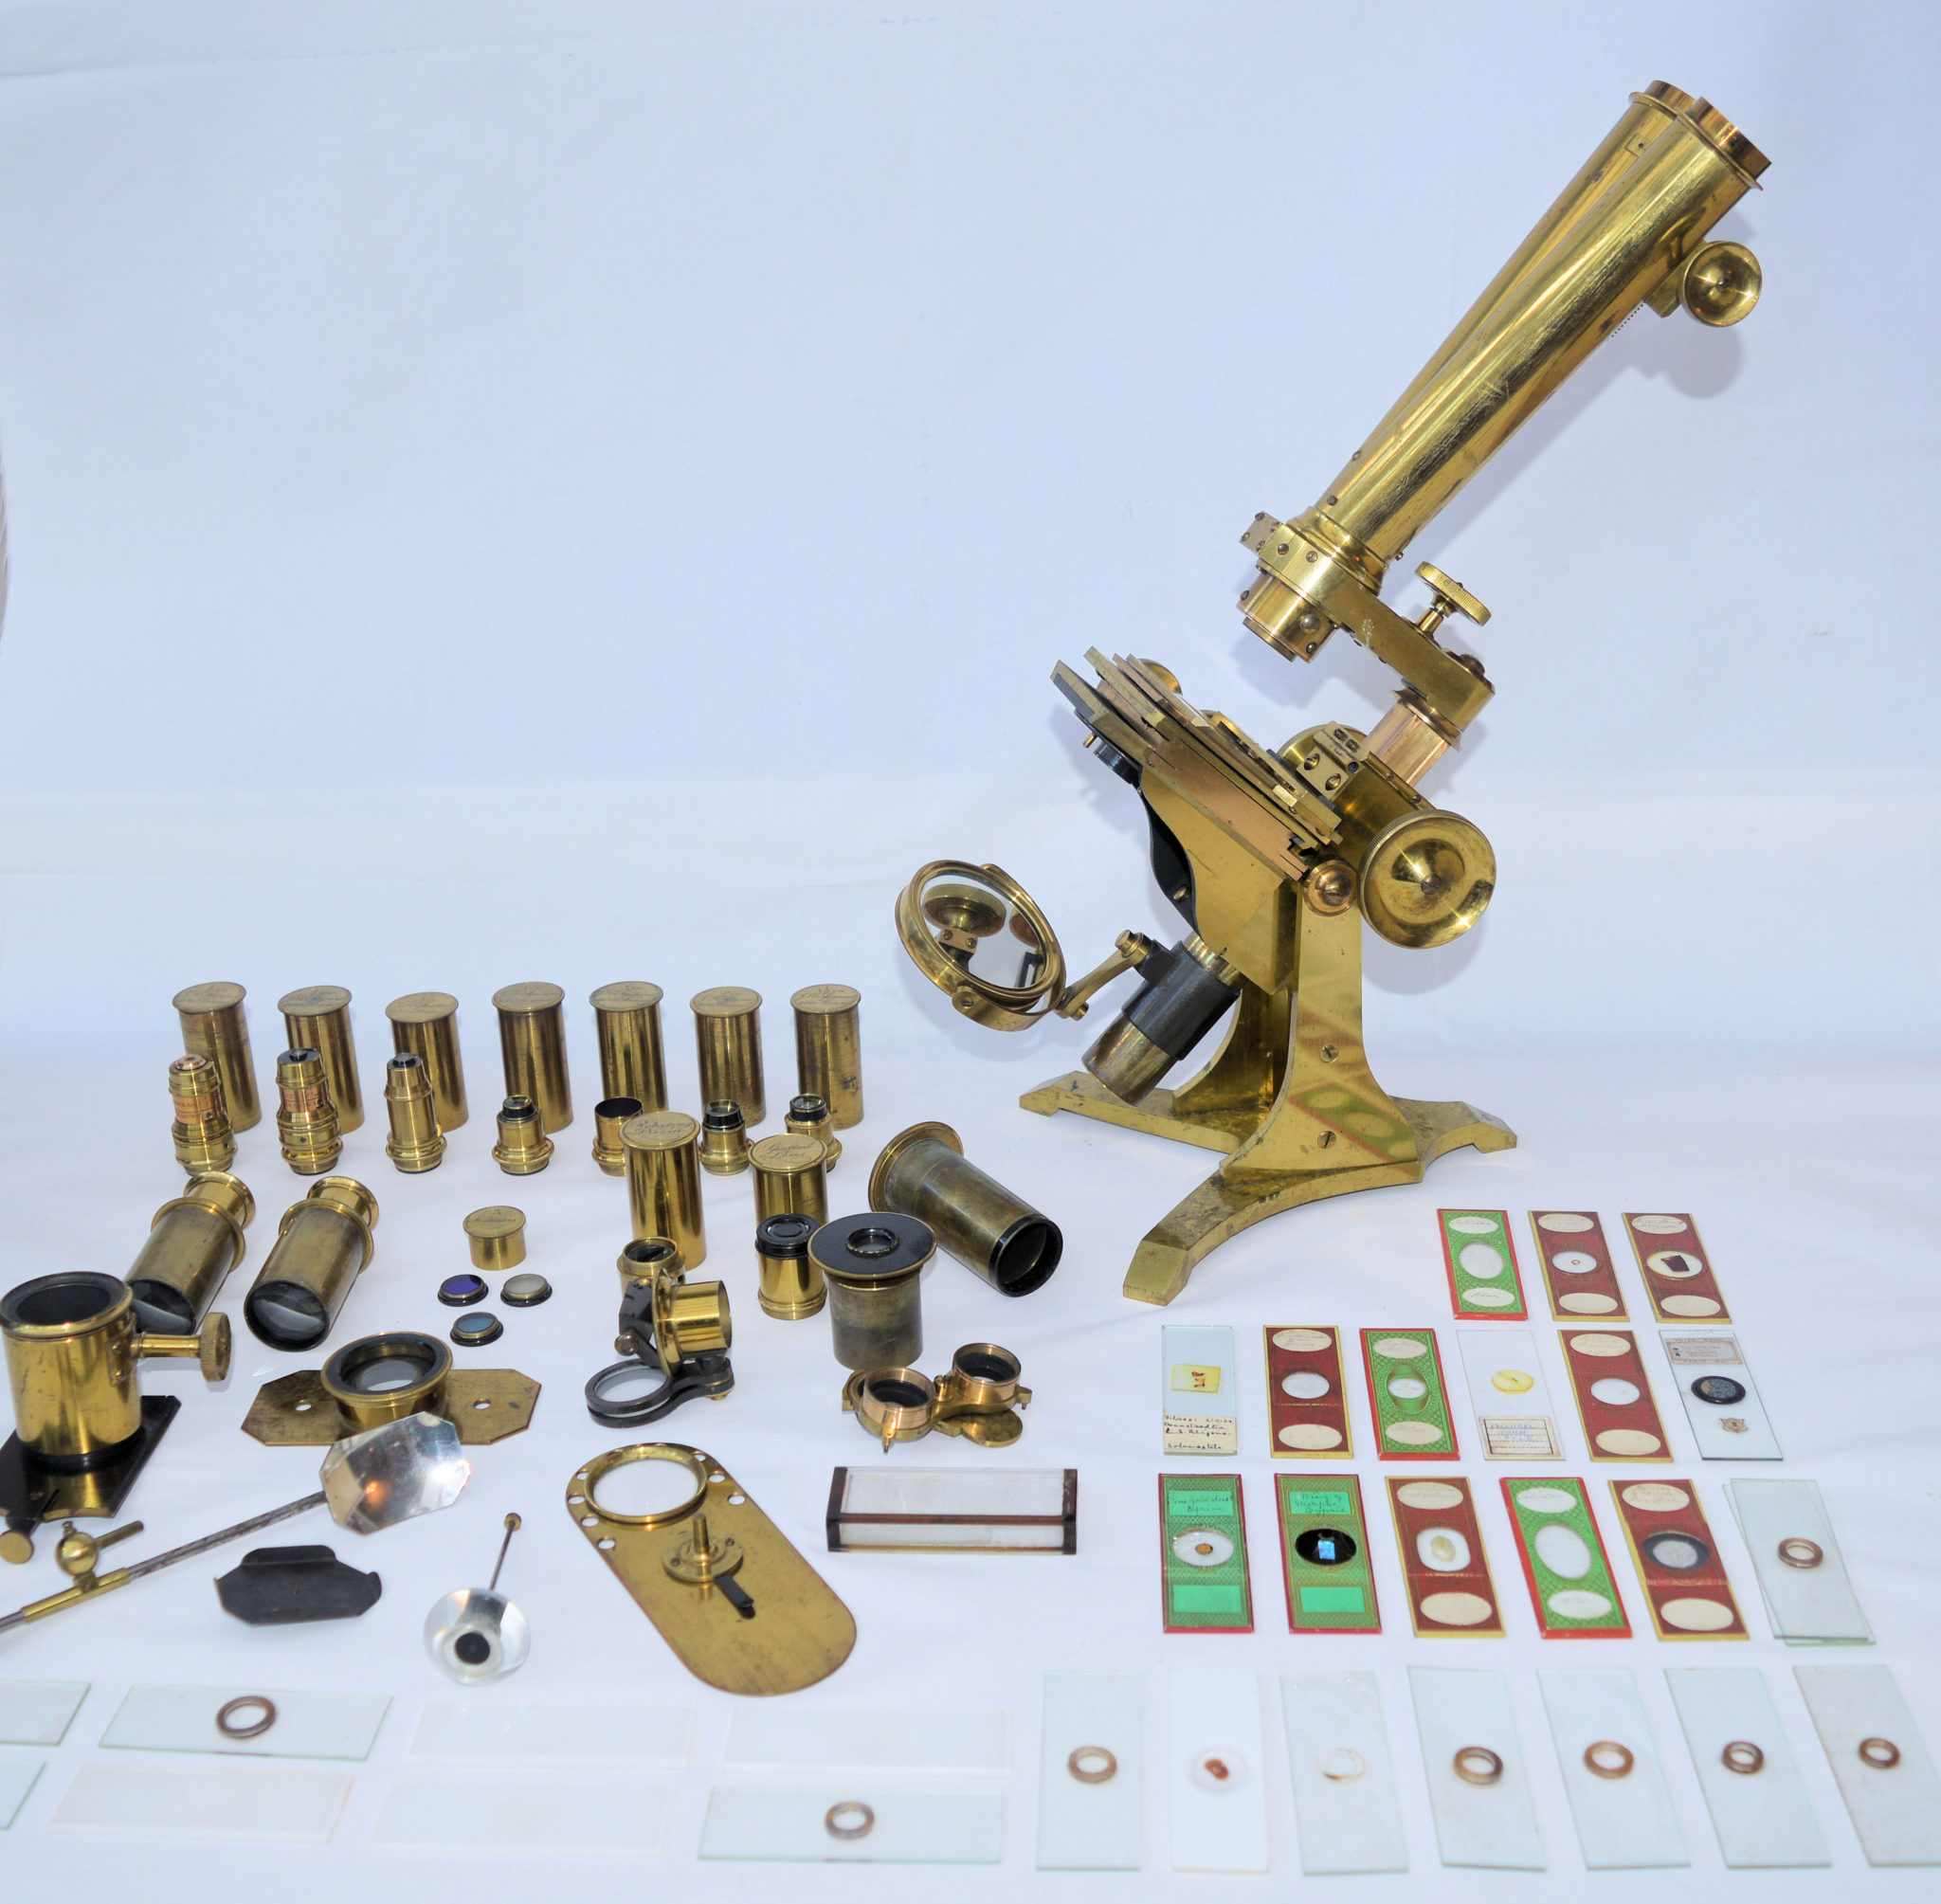 SOLD – Binocular microscope with accessories in case – J.H. Steward, 406 Strand.